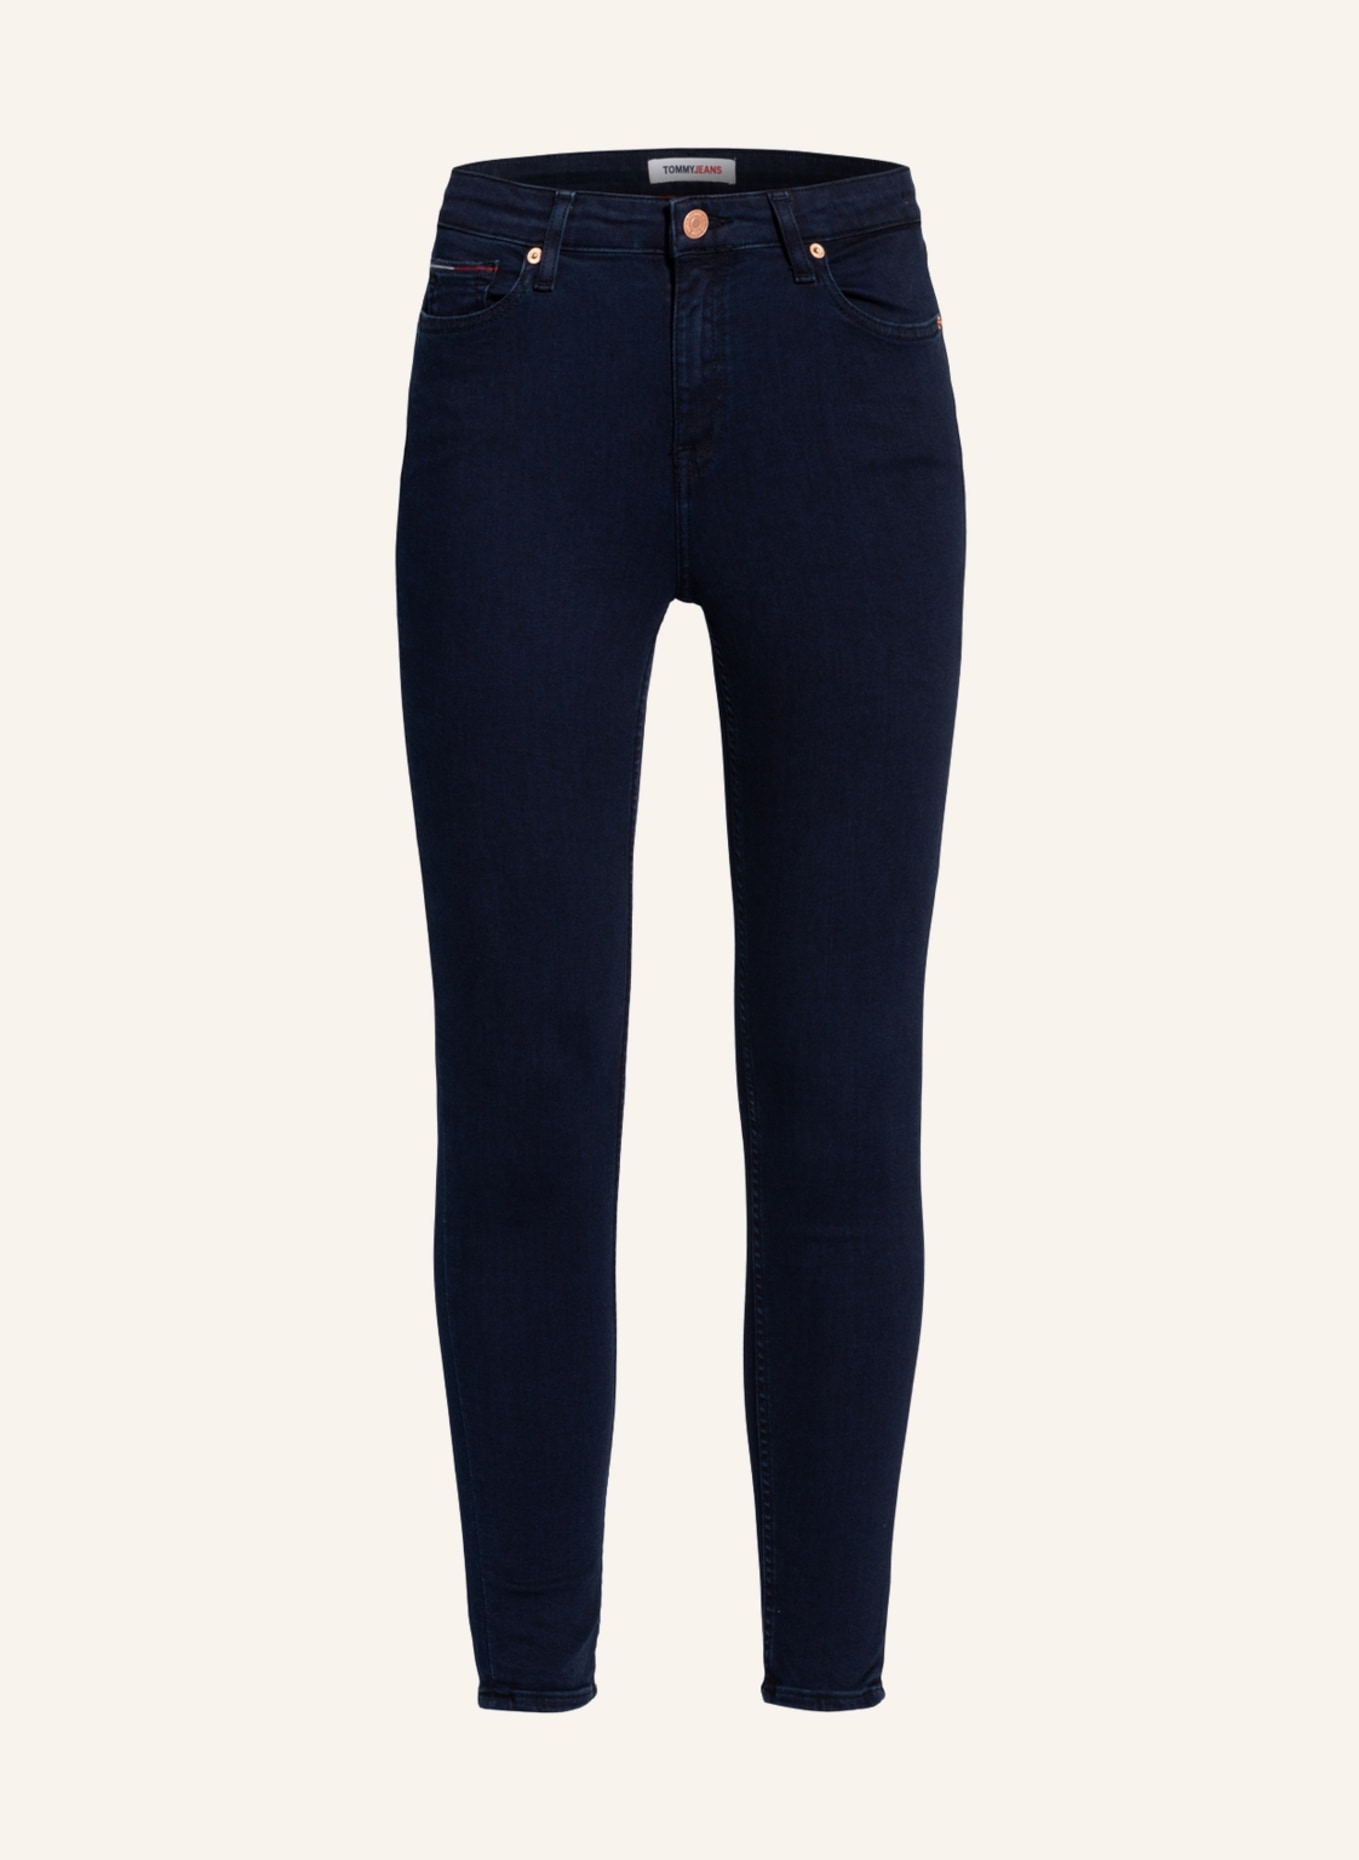 TOMMY JEANS Skinny Jeans NORA , Farbe: 1BK Avenue Dark Blue Stretch (Bild 1)